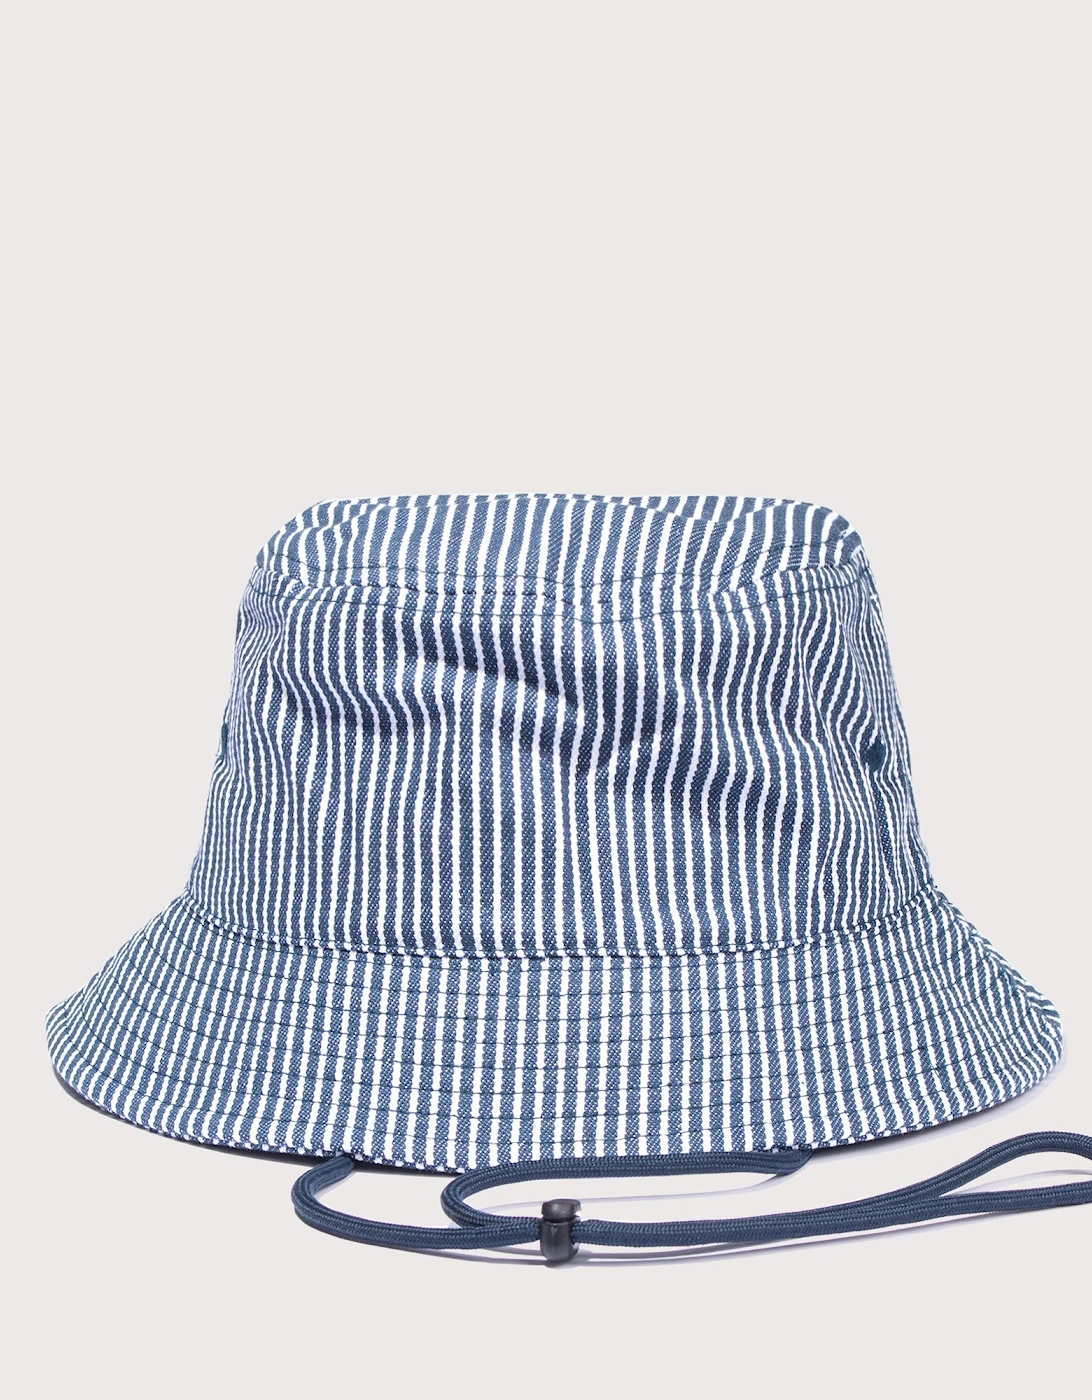 Hickory Bucket Hat